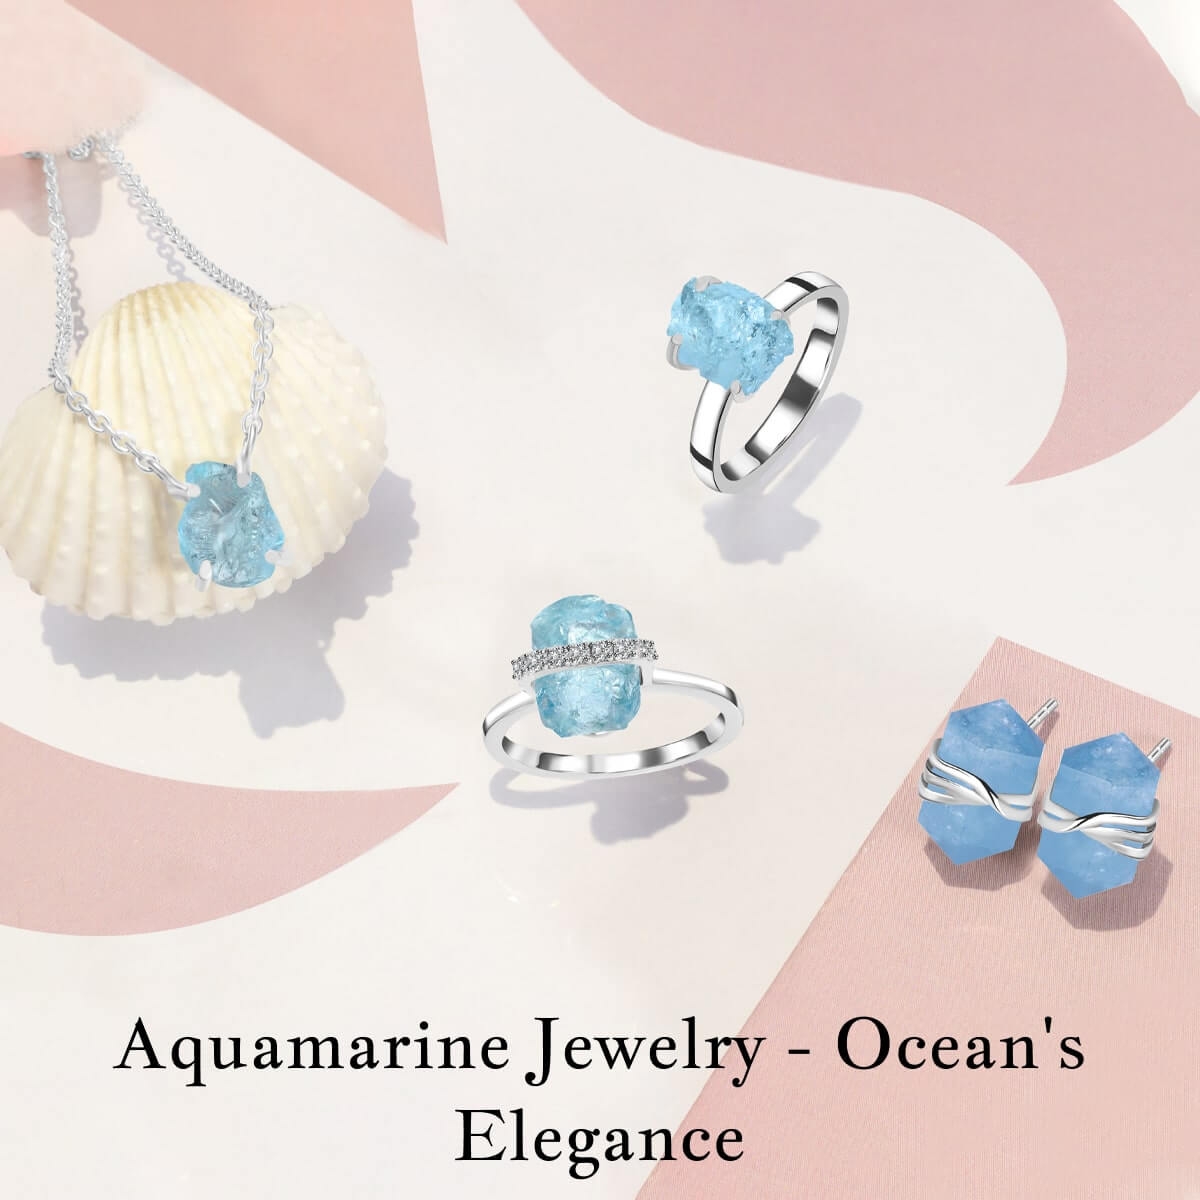 Aquamarine Jewelry Facts